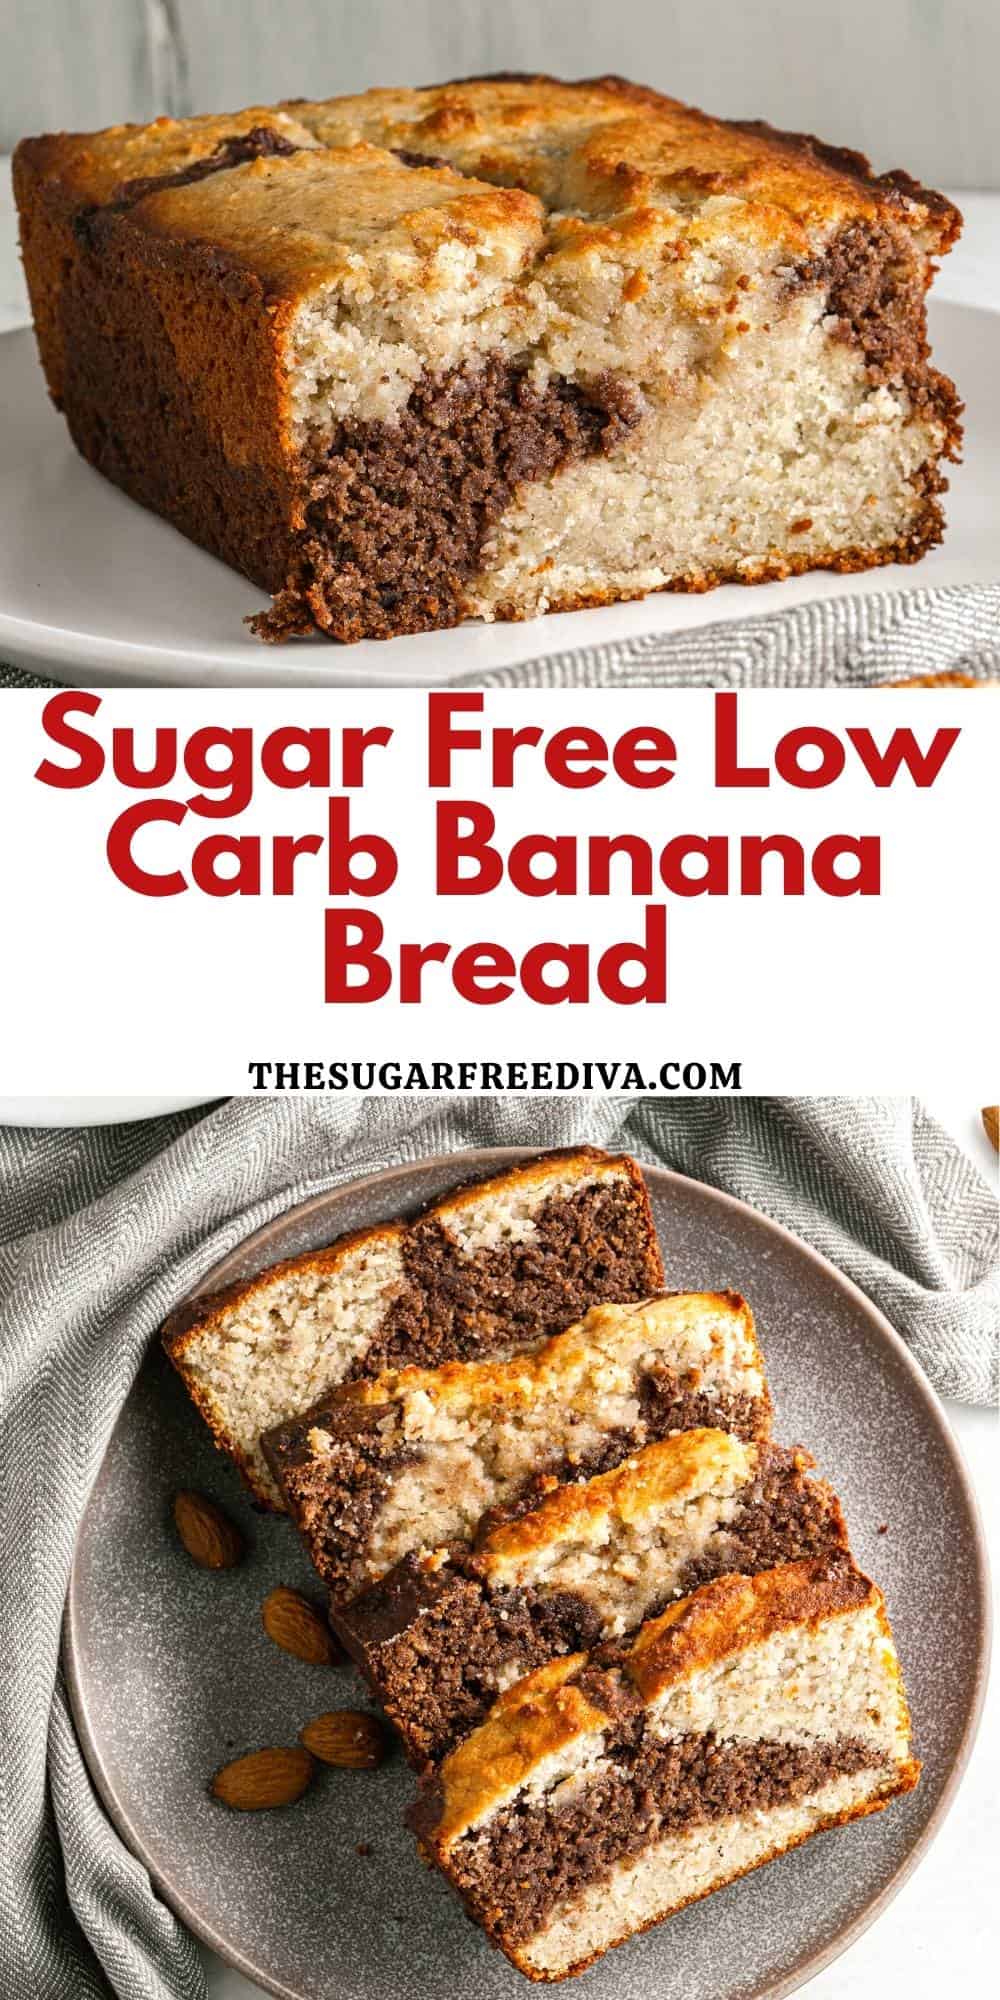 Sugar Free Low Carb Banana Bread